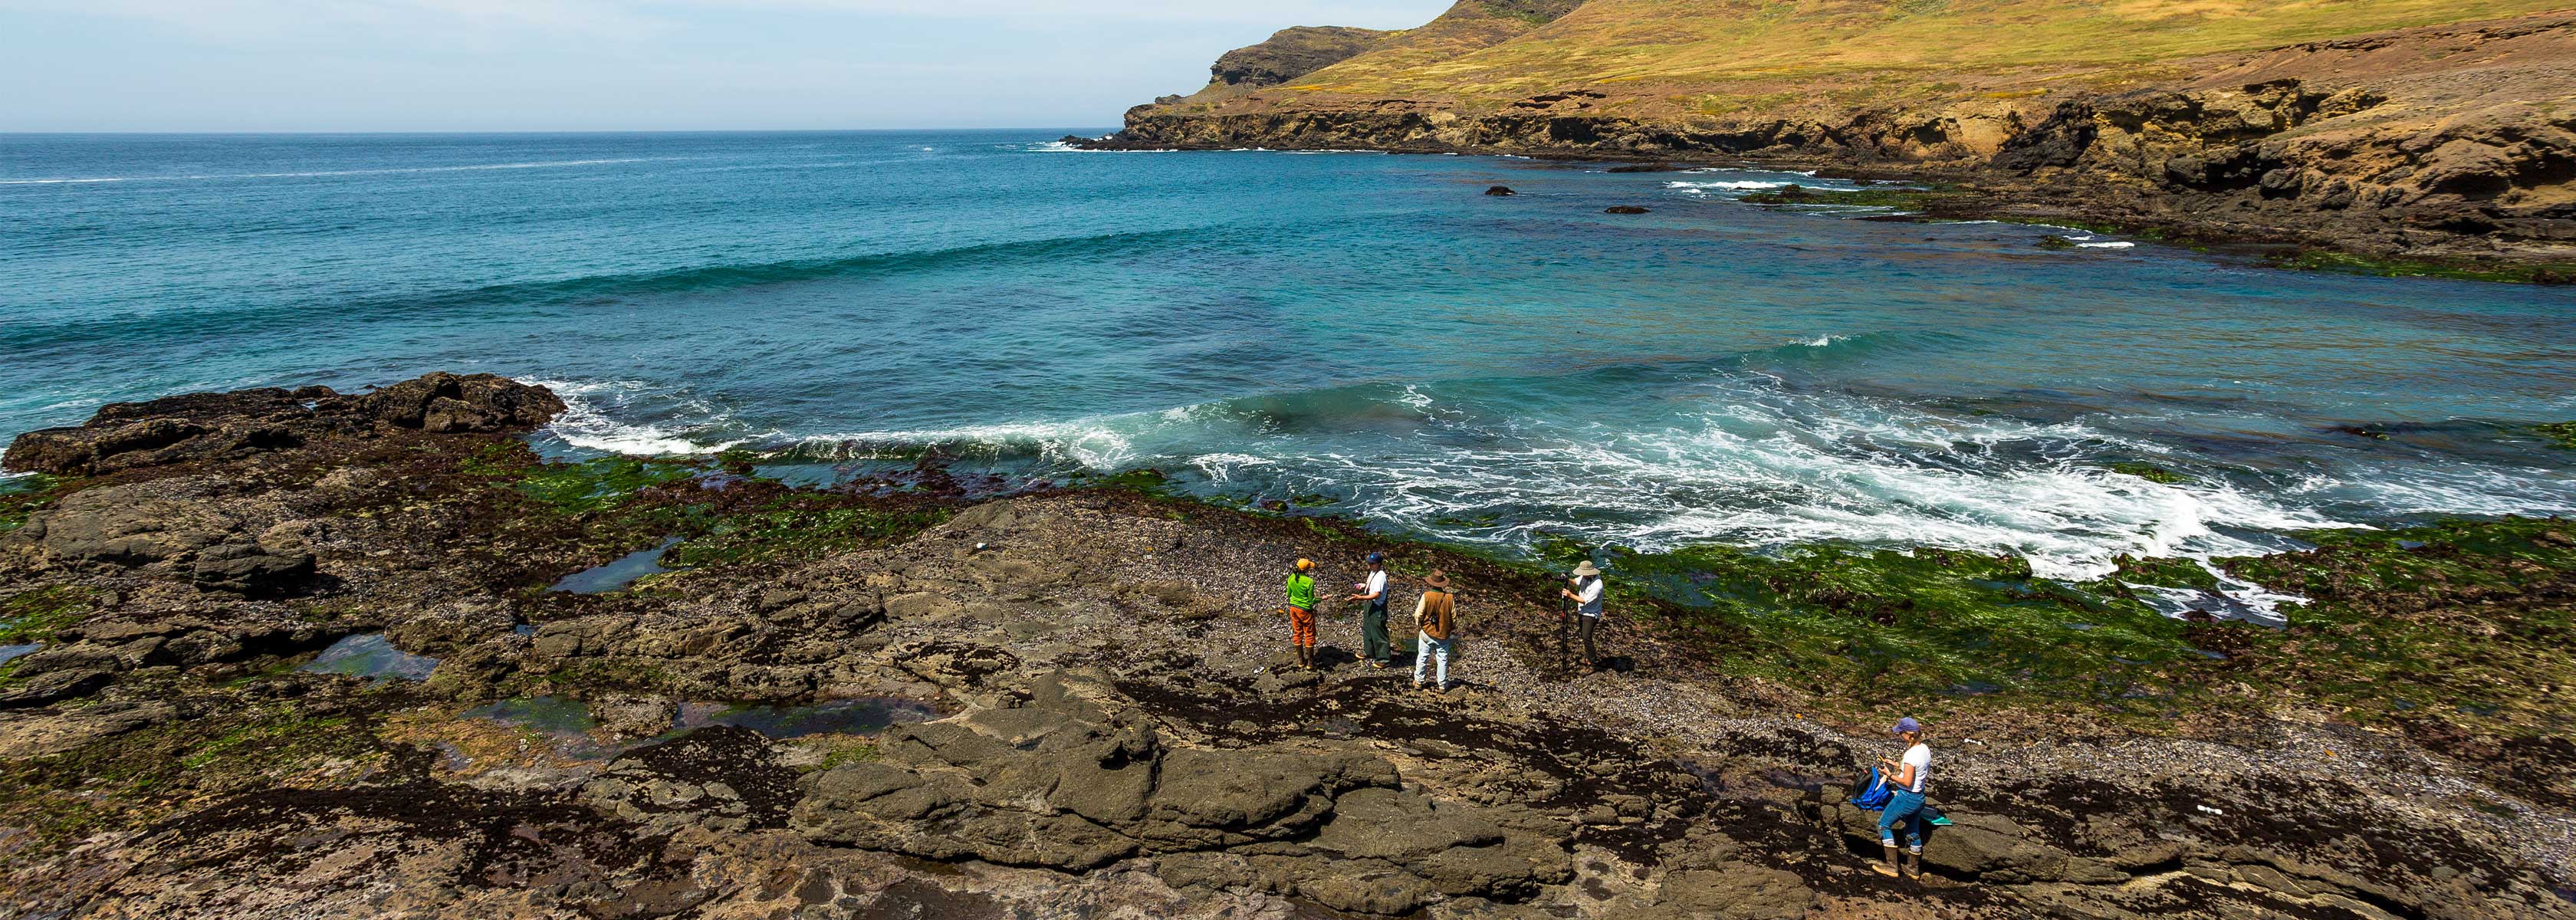 santa cruz island with researchers on the coastline